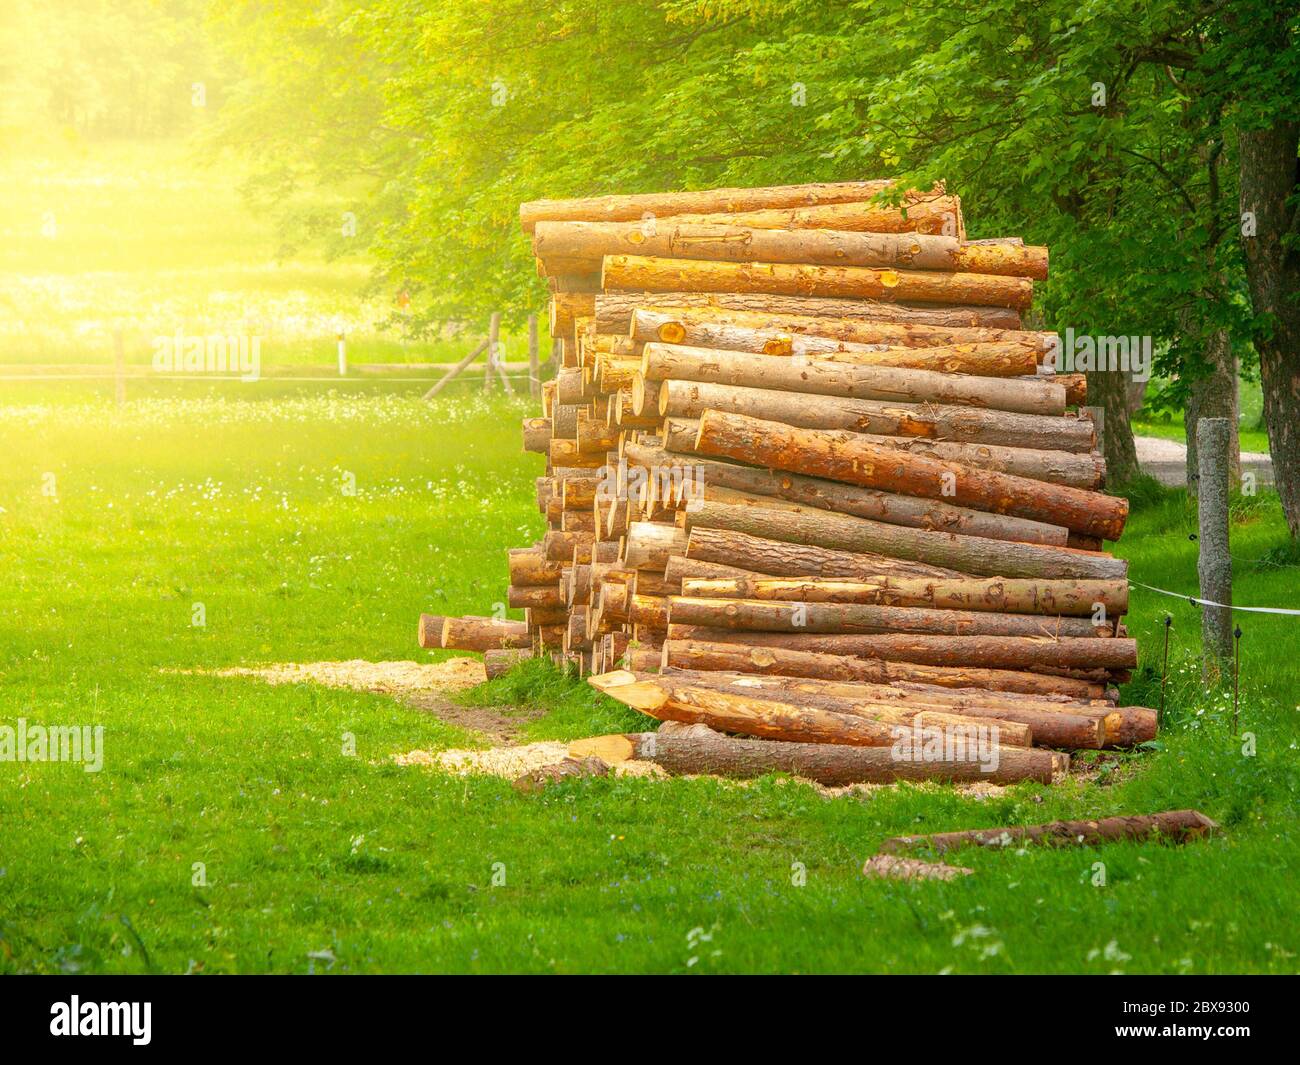 Pila de troncos de madera picada en el prado verde. Pila de madera. Foto de stock